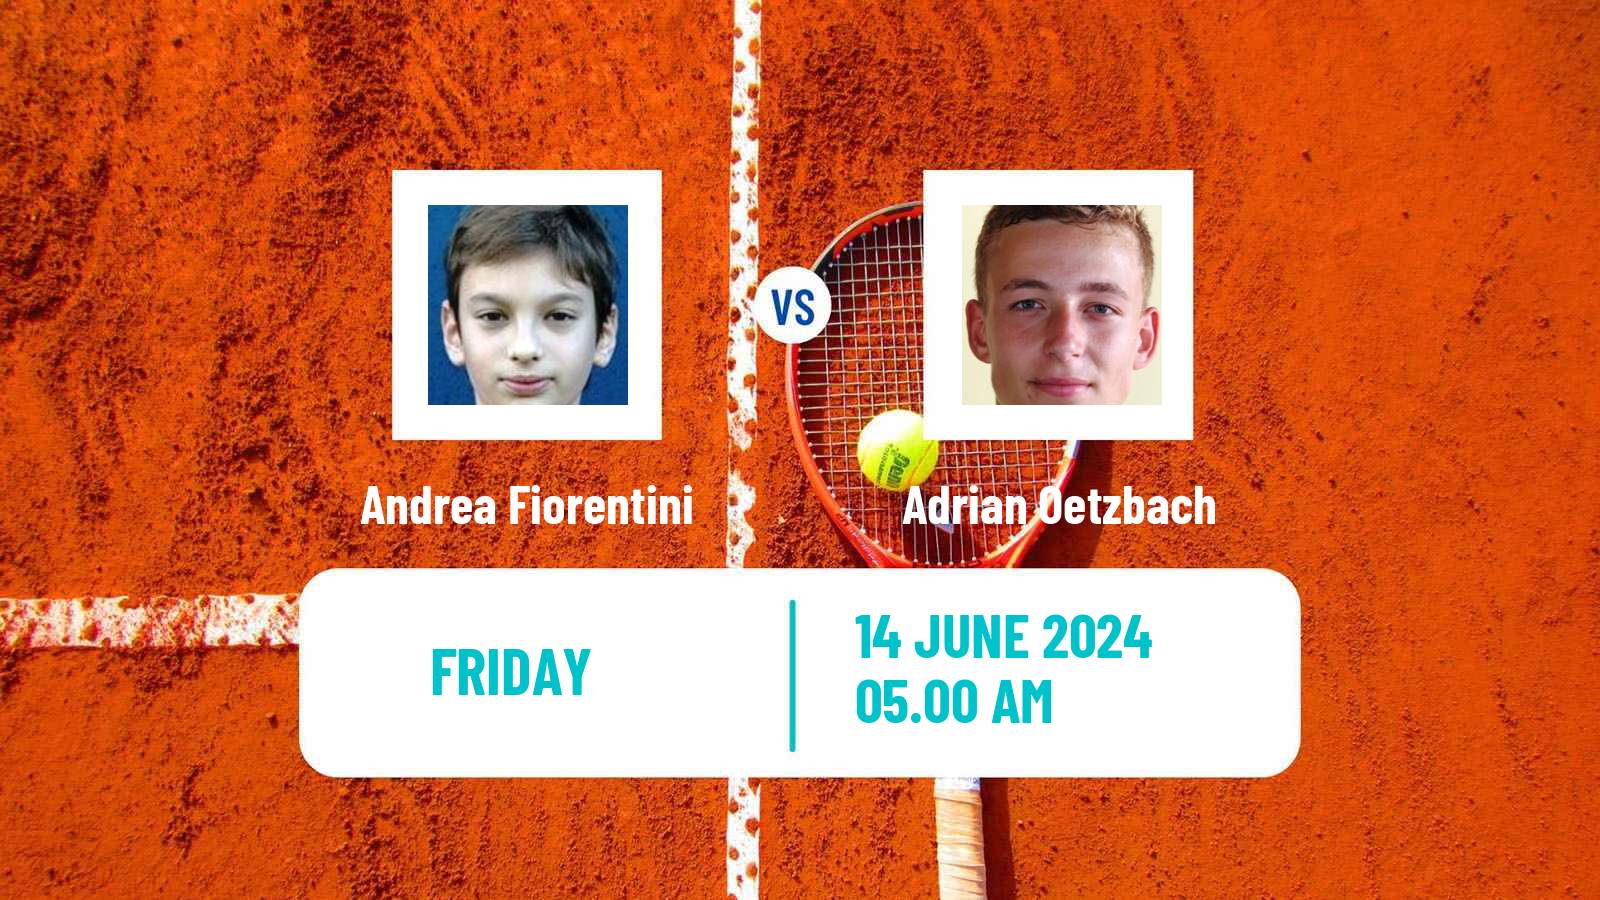 Tennis ITF M25 Aarhus Men Andrea Fiorentini - Adrian Oetzbach